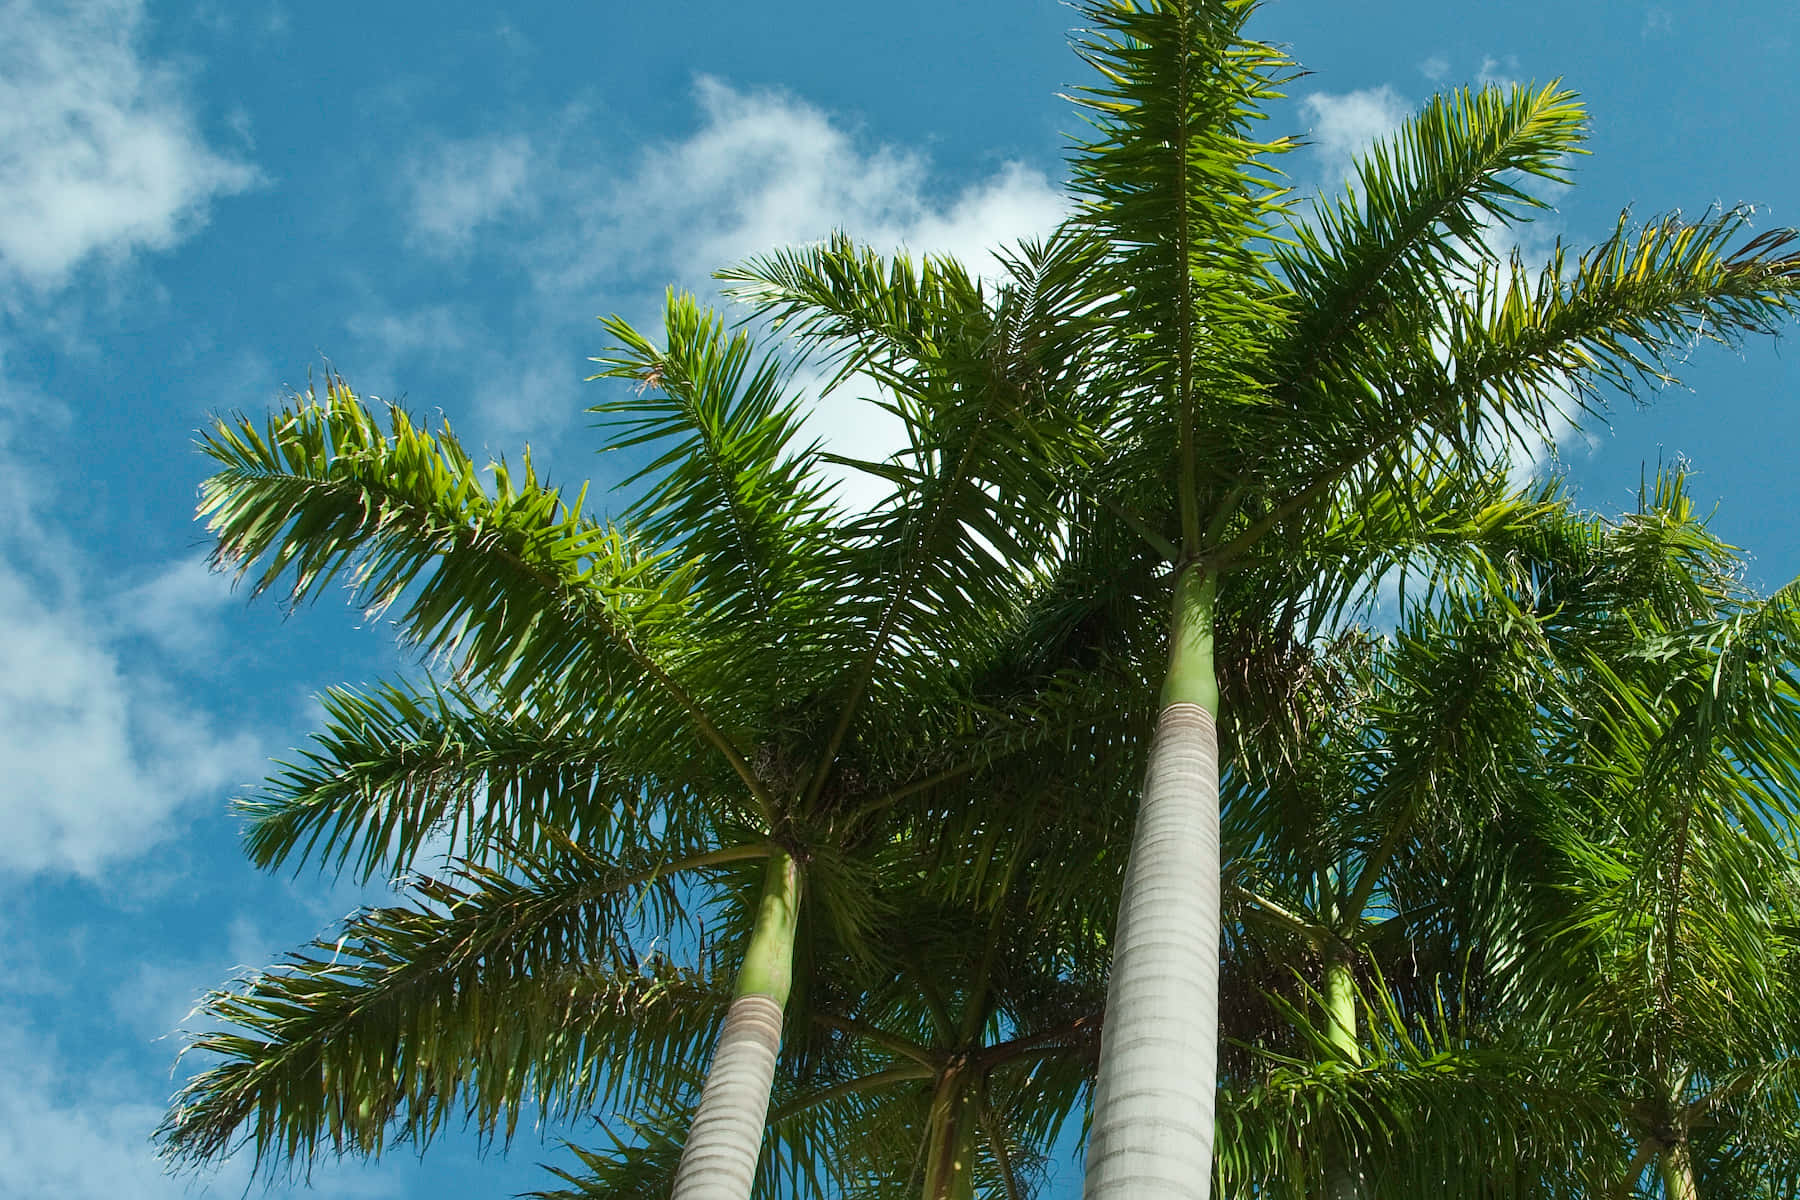 A beautiful palm tree overlooking a serene ocean